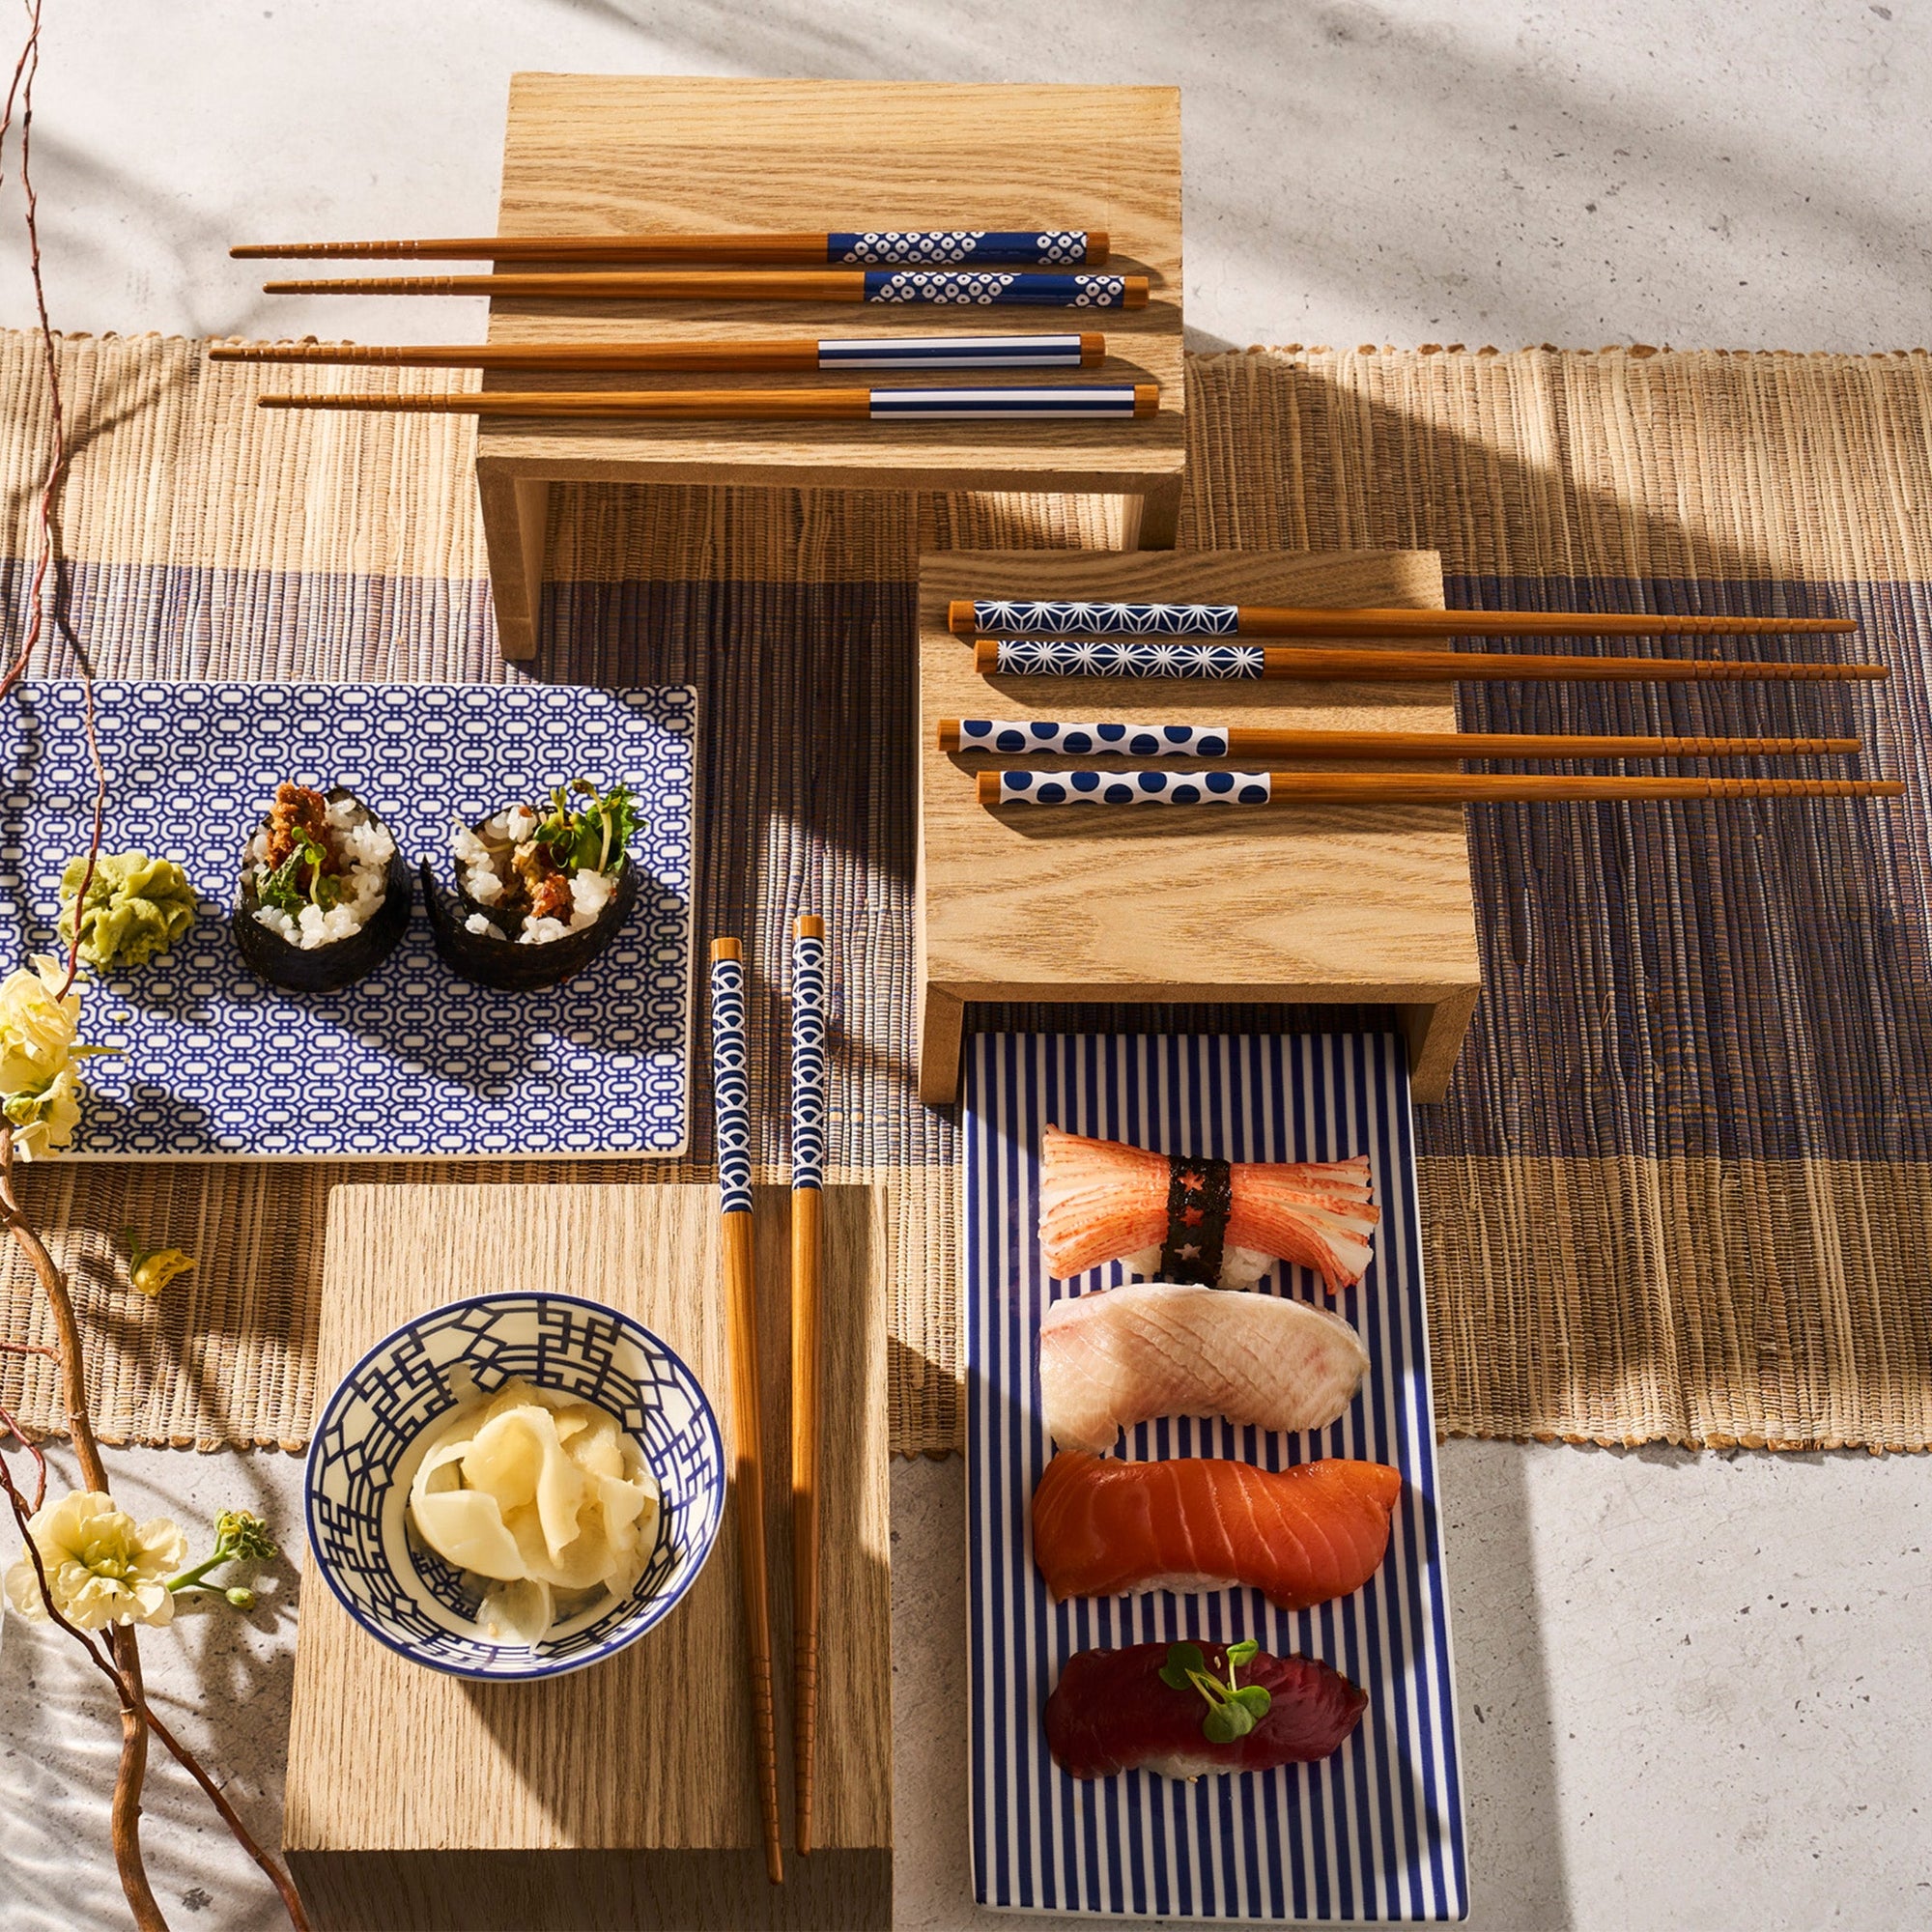 Kyoto Blue and White Bamboo Chopsticks from Caskata.